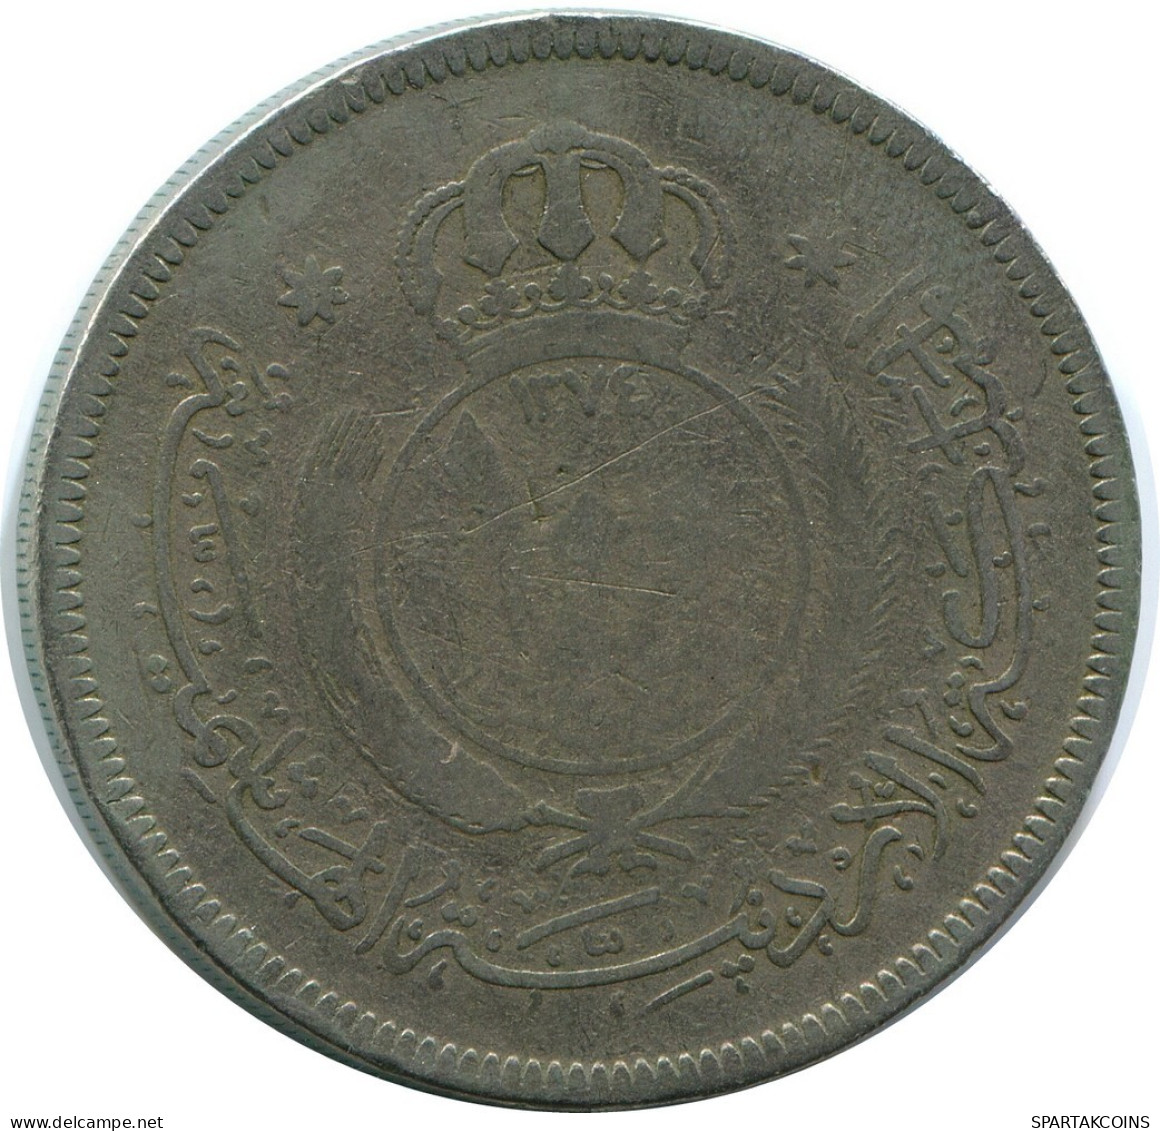 1 DIRHAM / 100 FILS 1955 JORDAN Coin #AP098.U.A - Jordanië